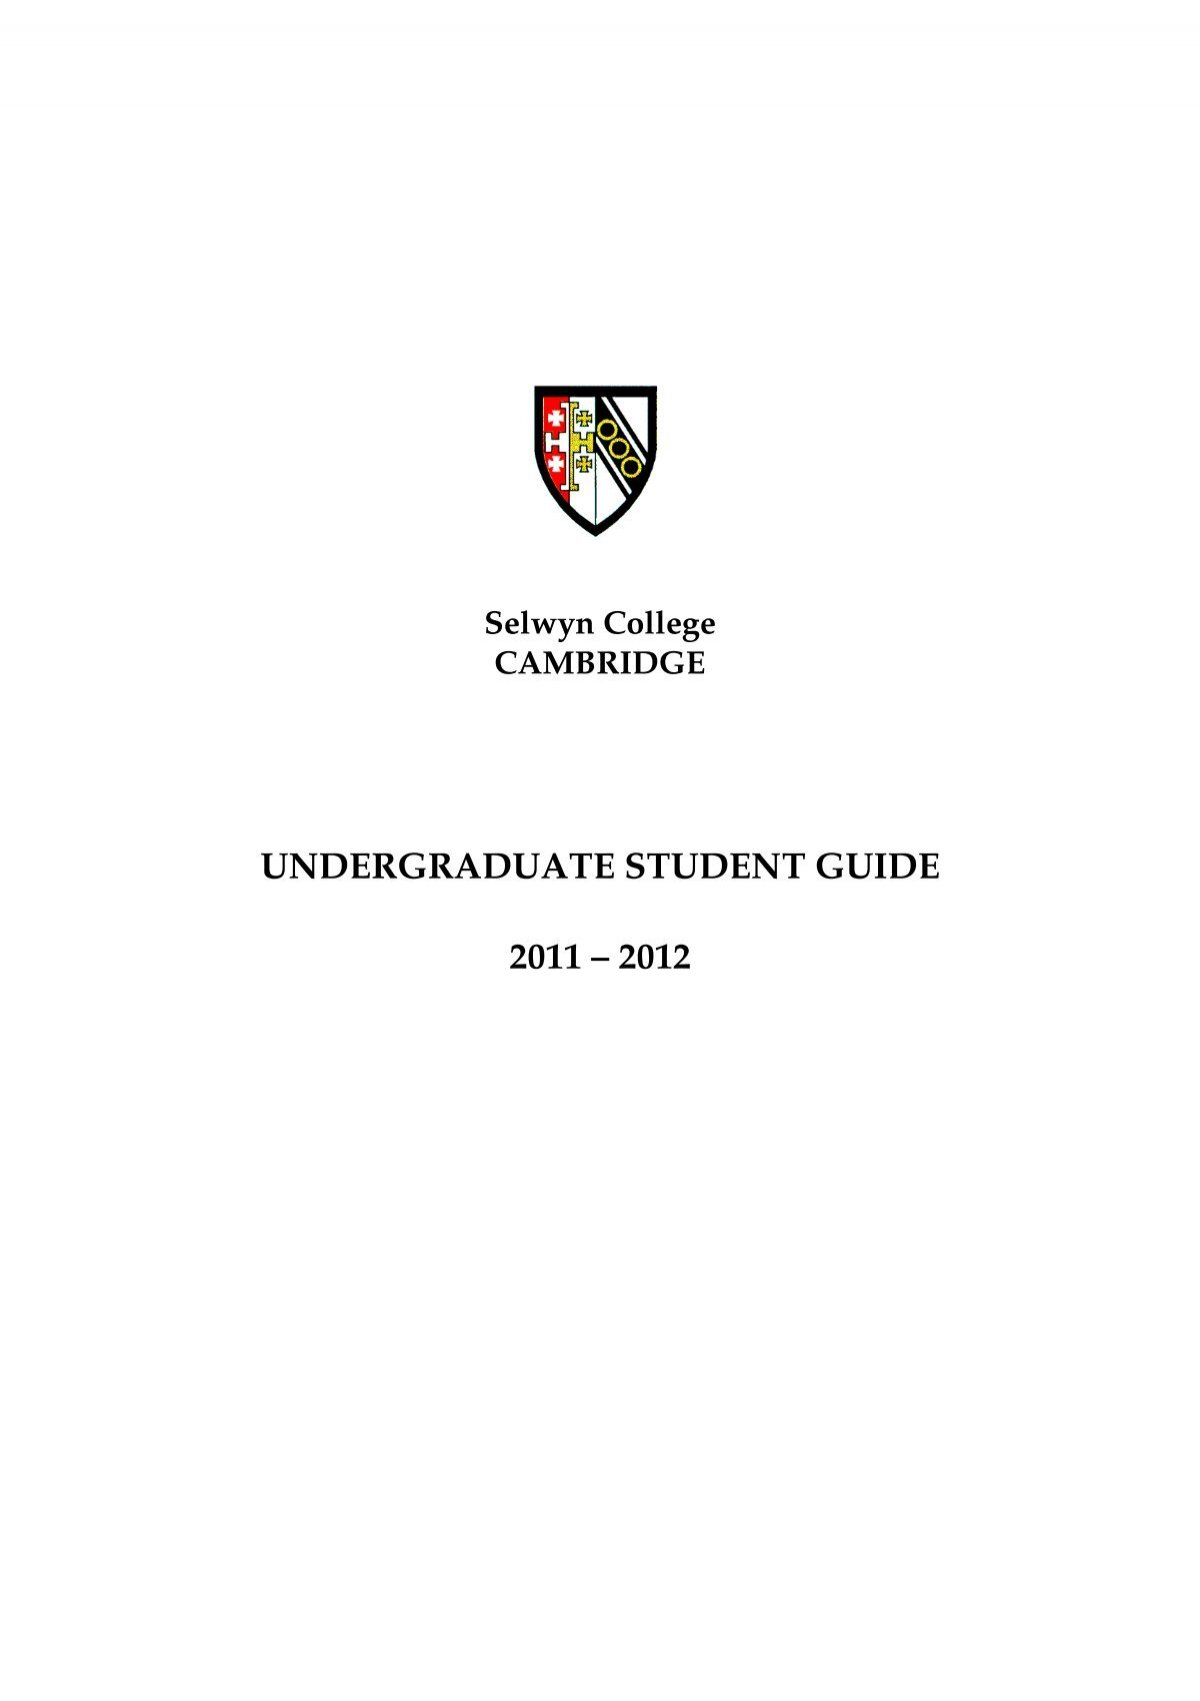 Cambridge Math Tripos Grade Boundaries - The Student Room